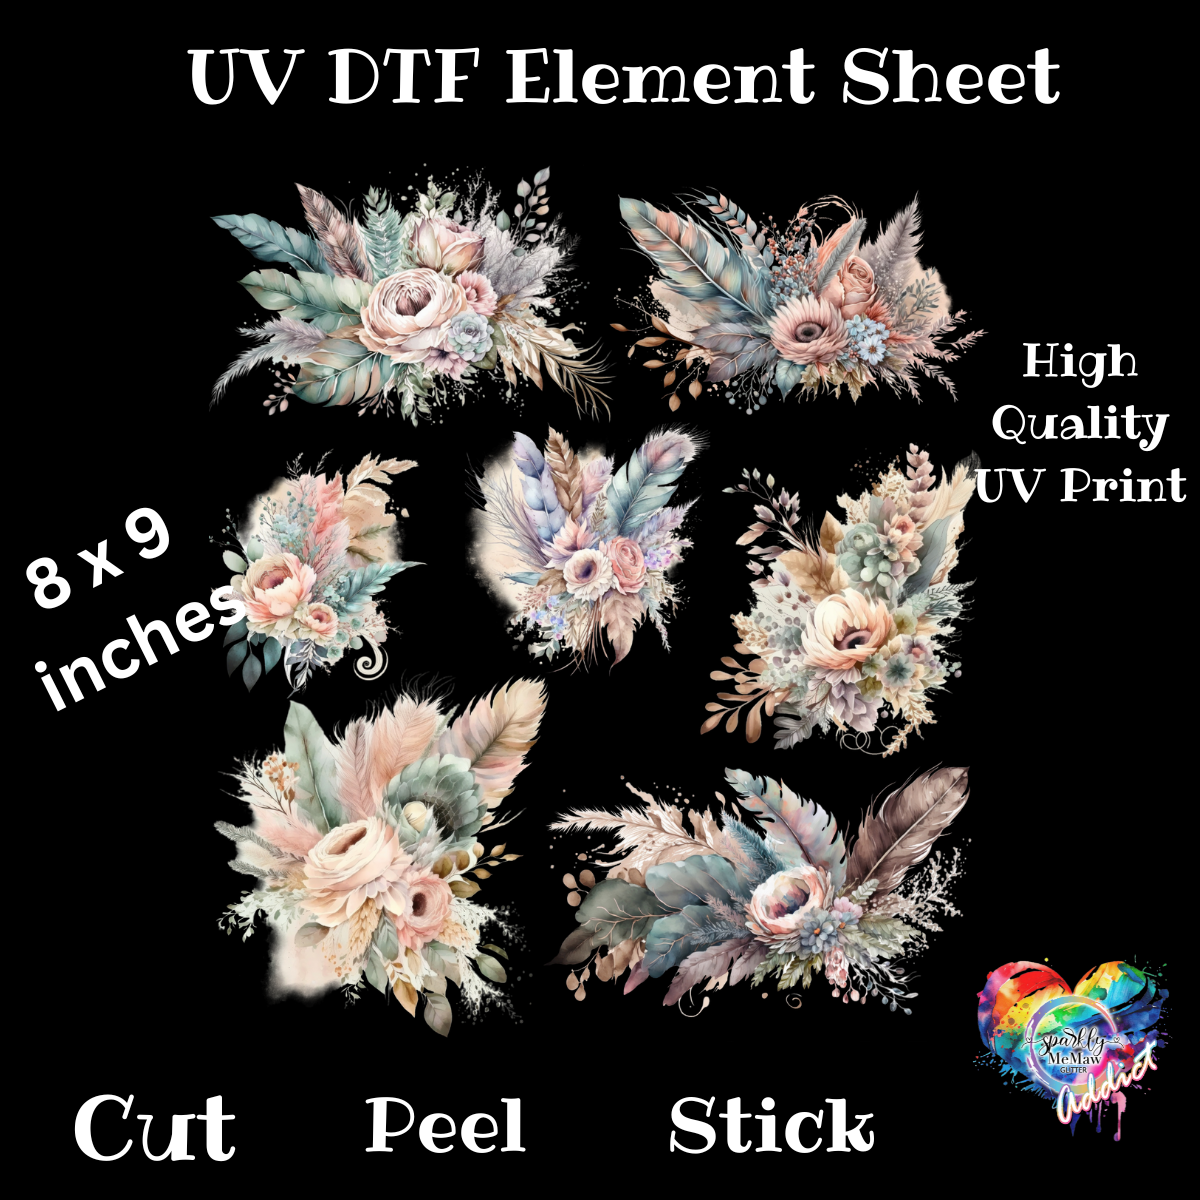 Flowers UV DTF Element Sheet